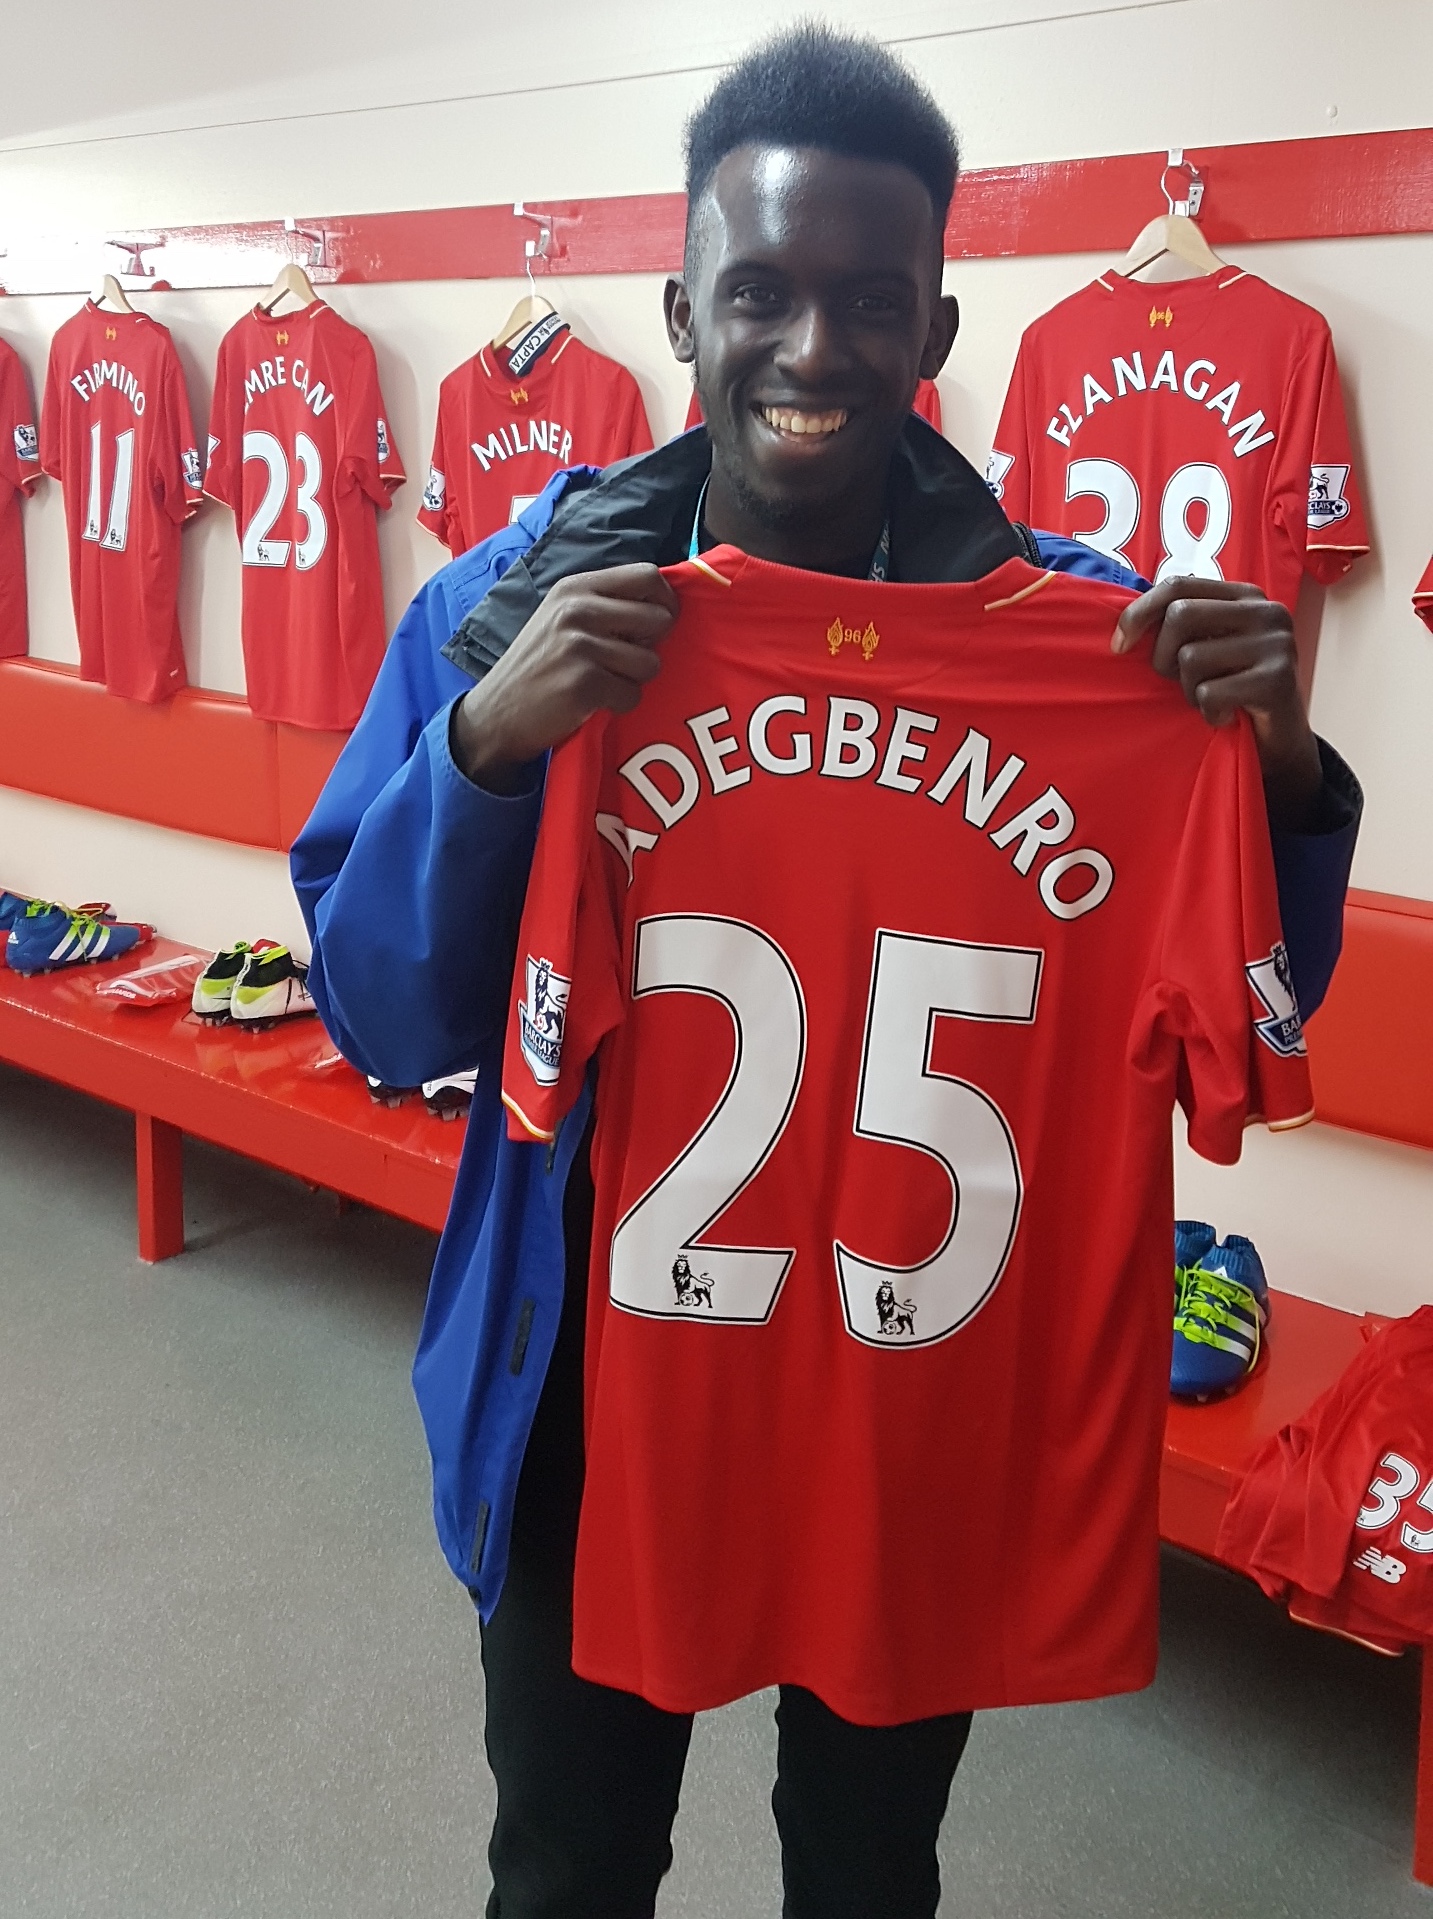 Emini holding up a Liverpool FC shirt